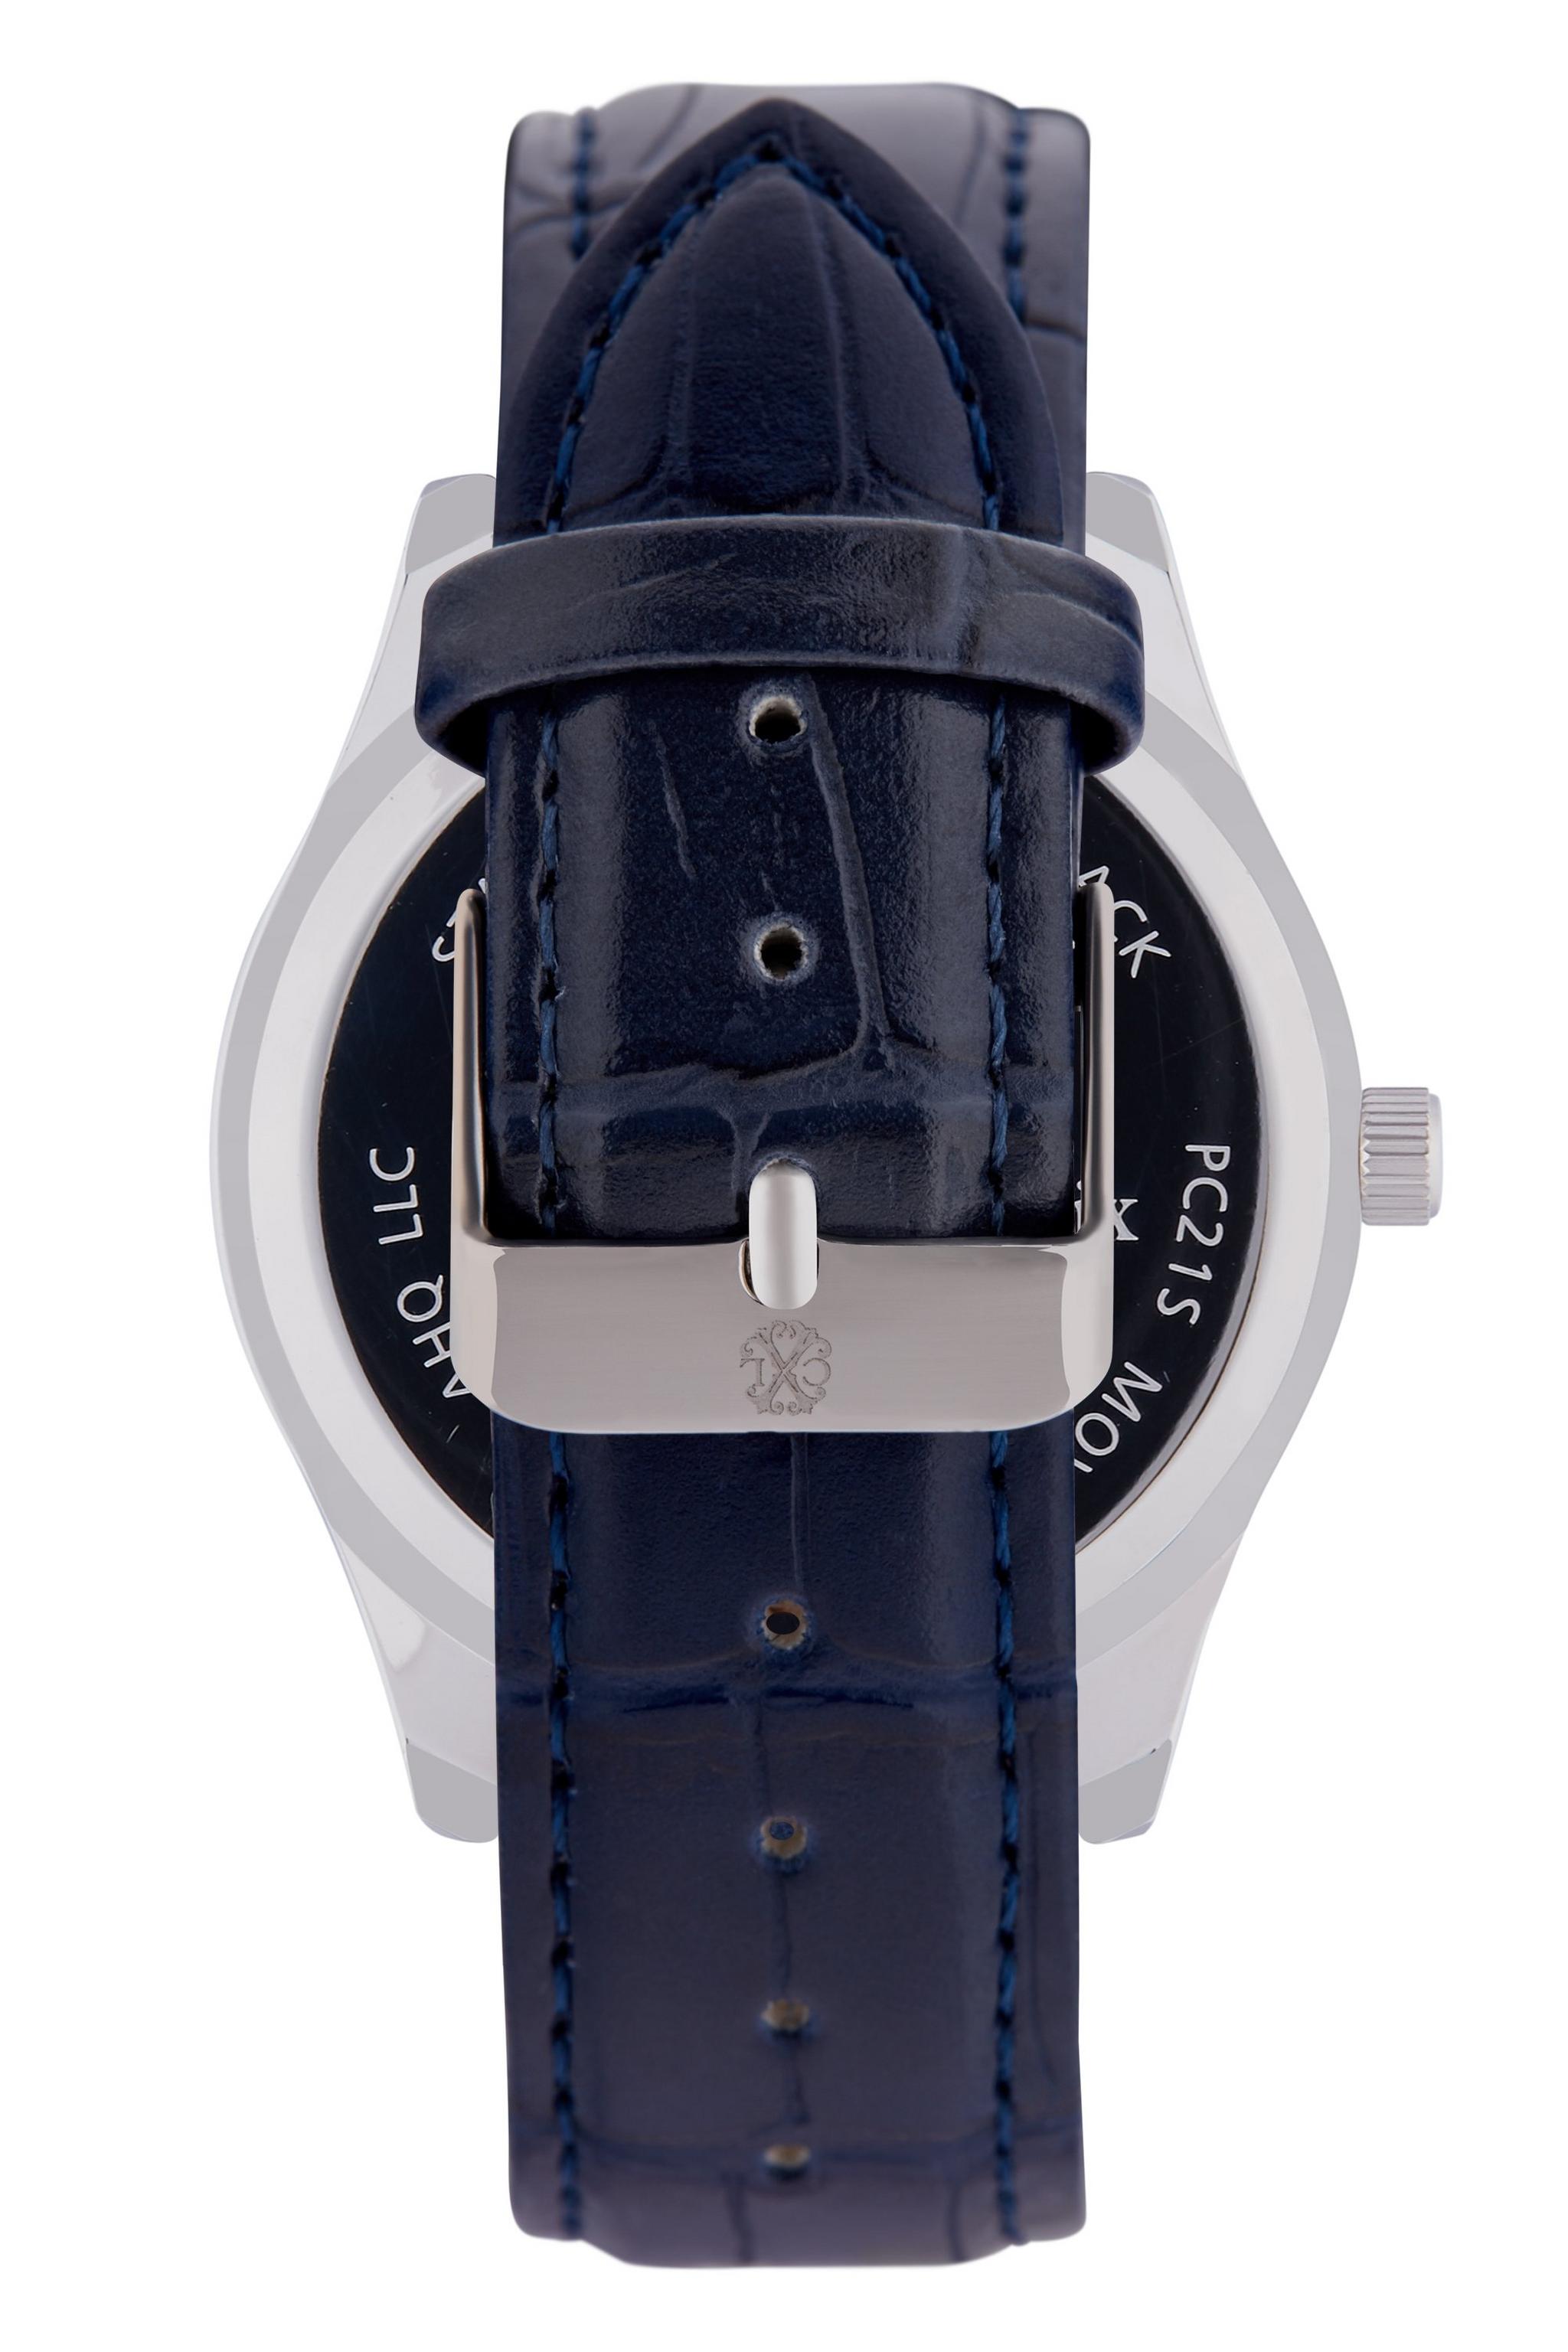 Christian Lacroix 41mm Analog Gents' Leather Watch - CXLS18008